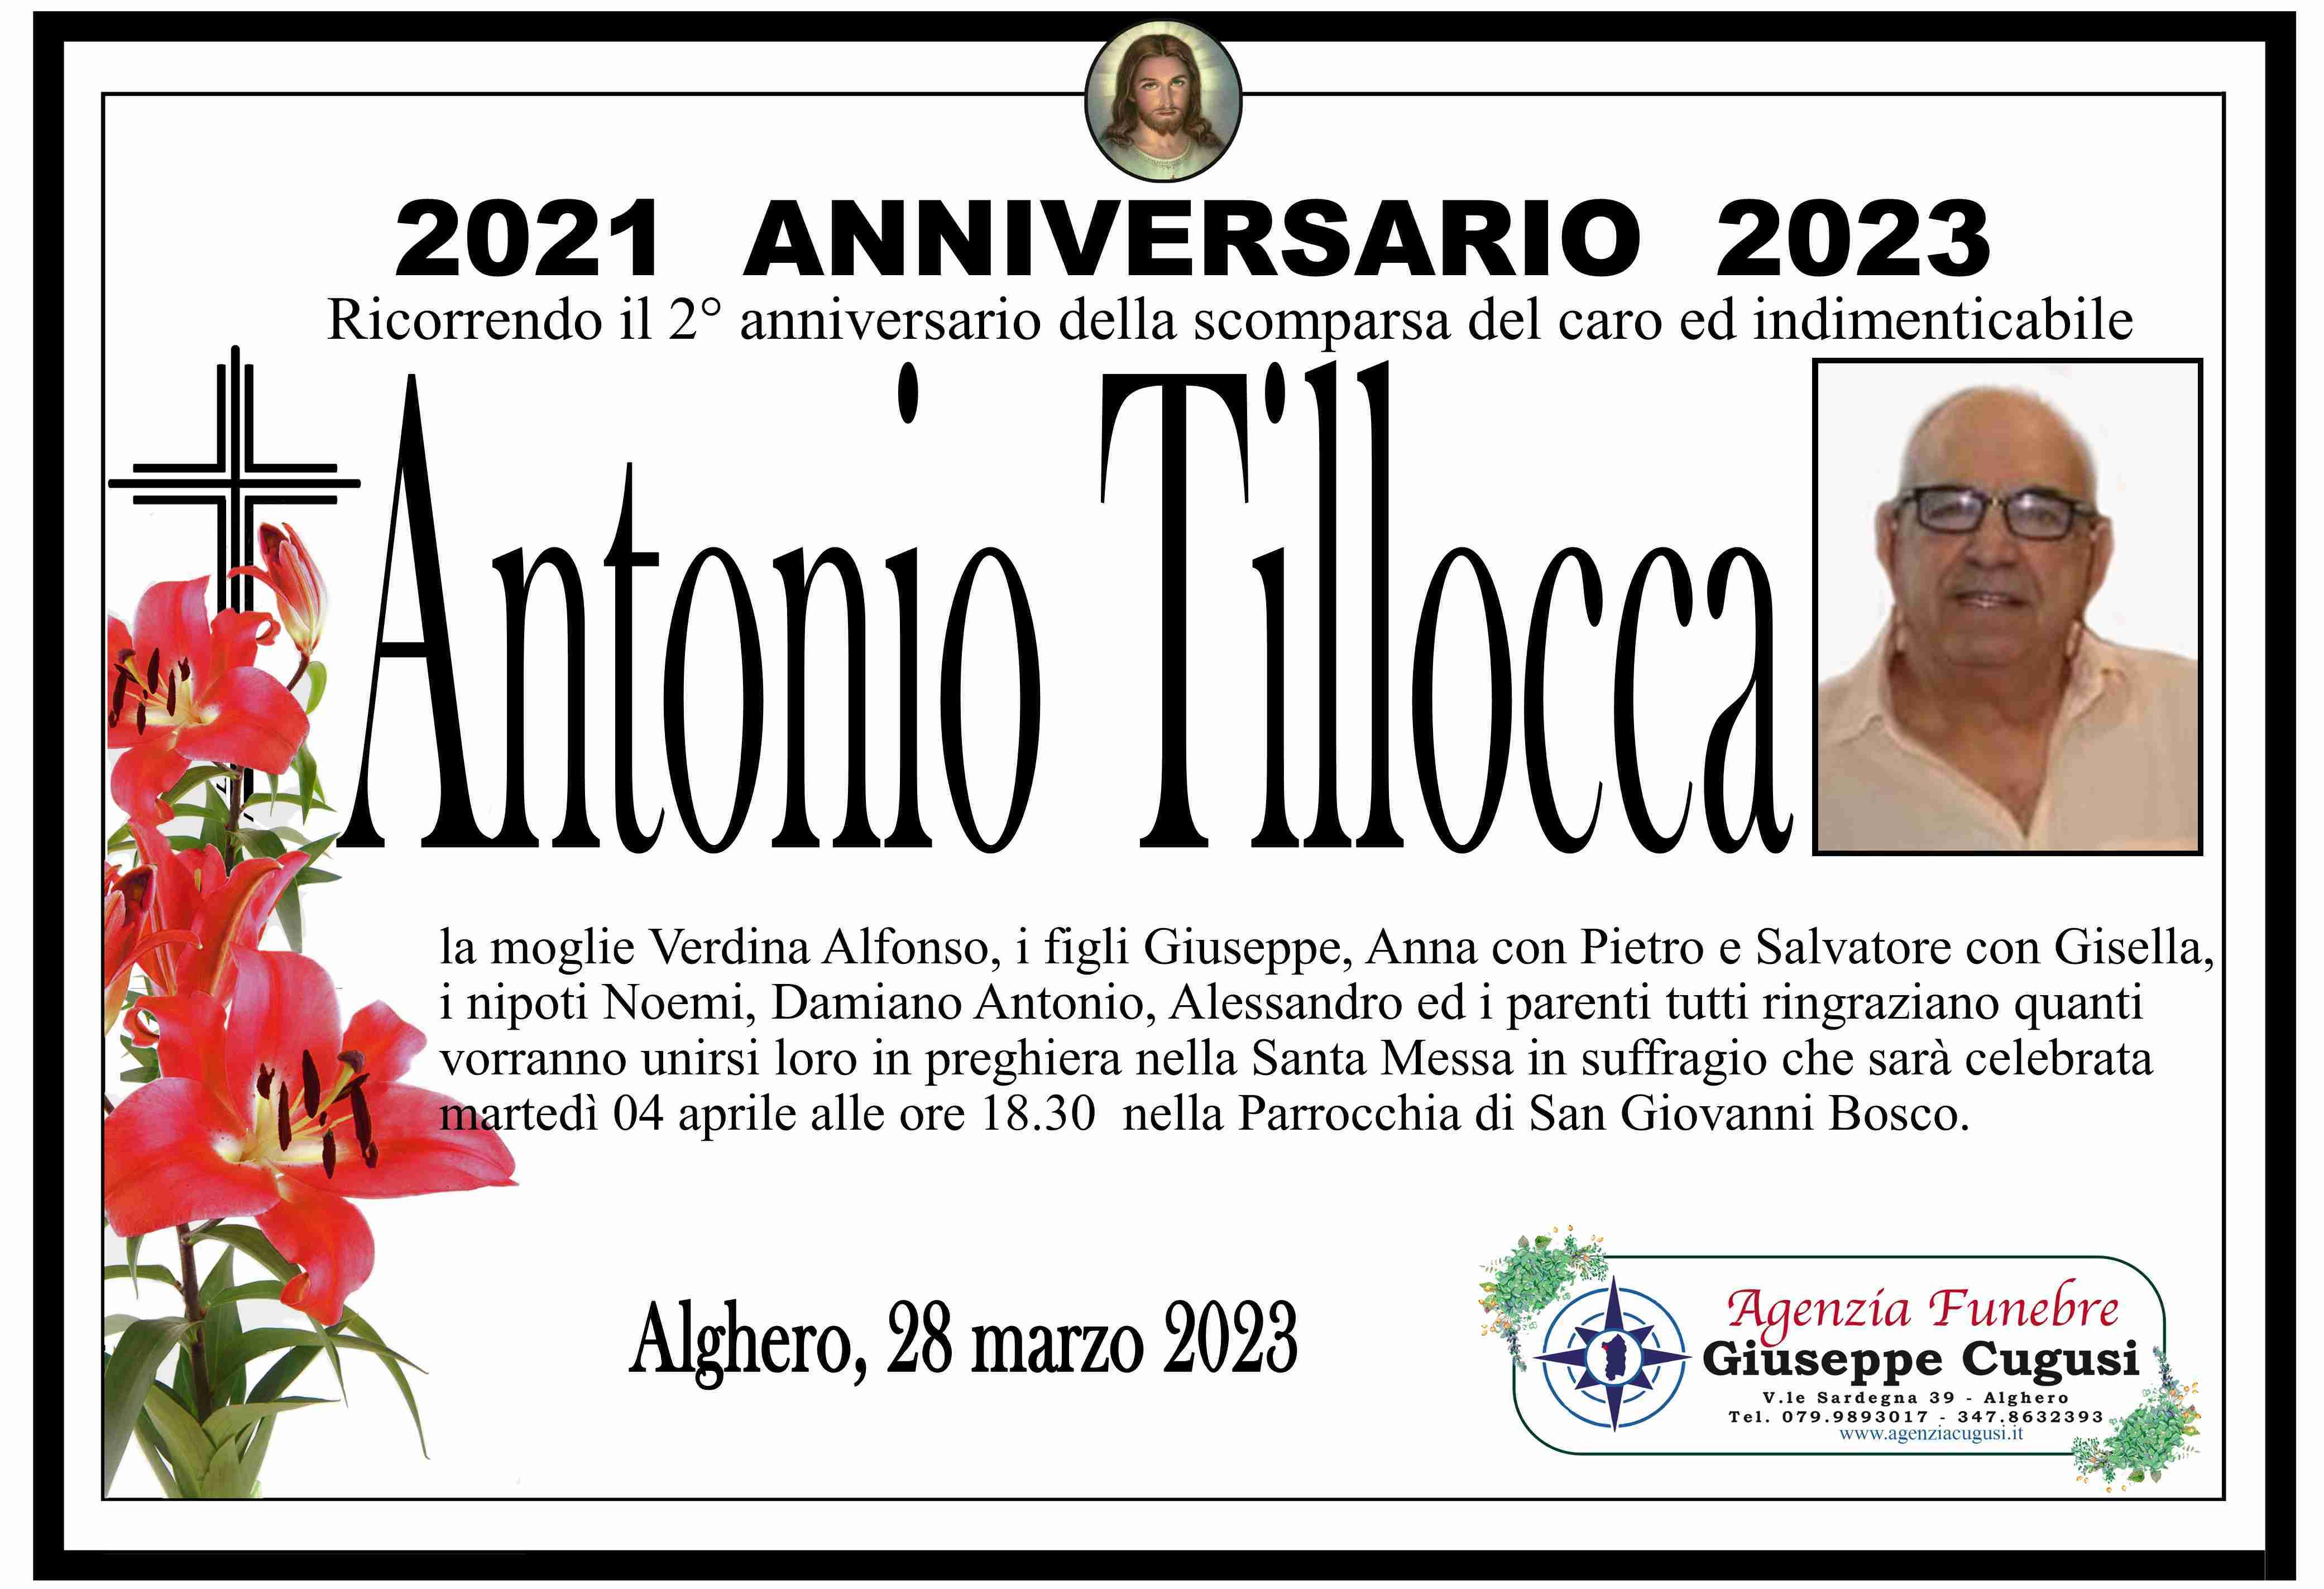 Antonio Tillocca